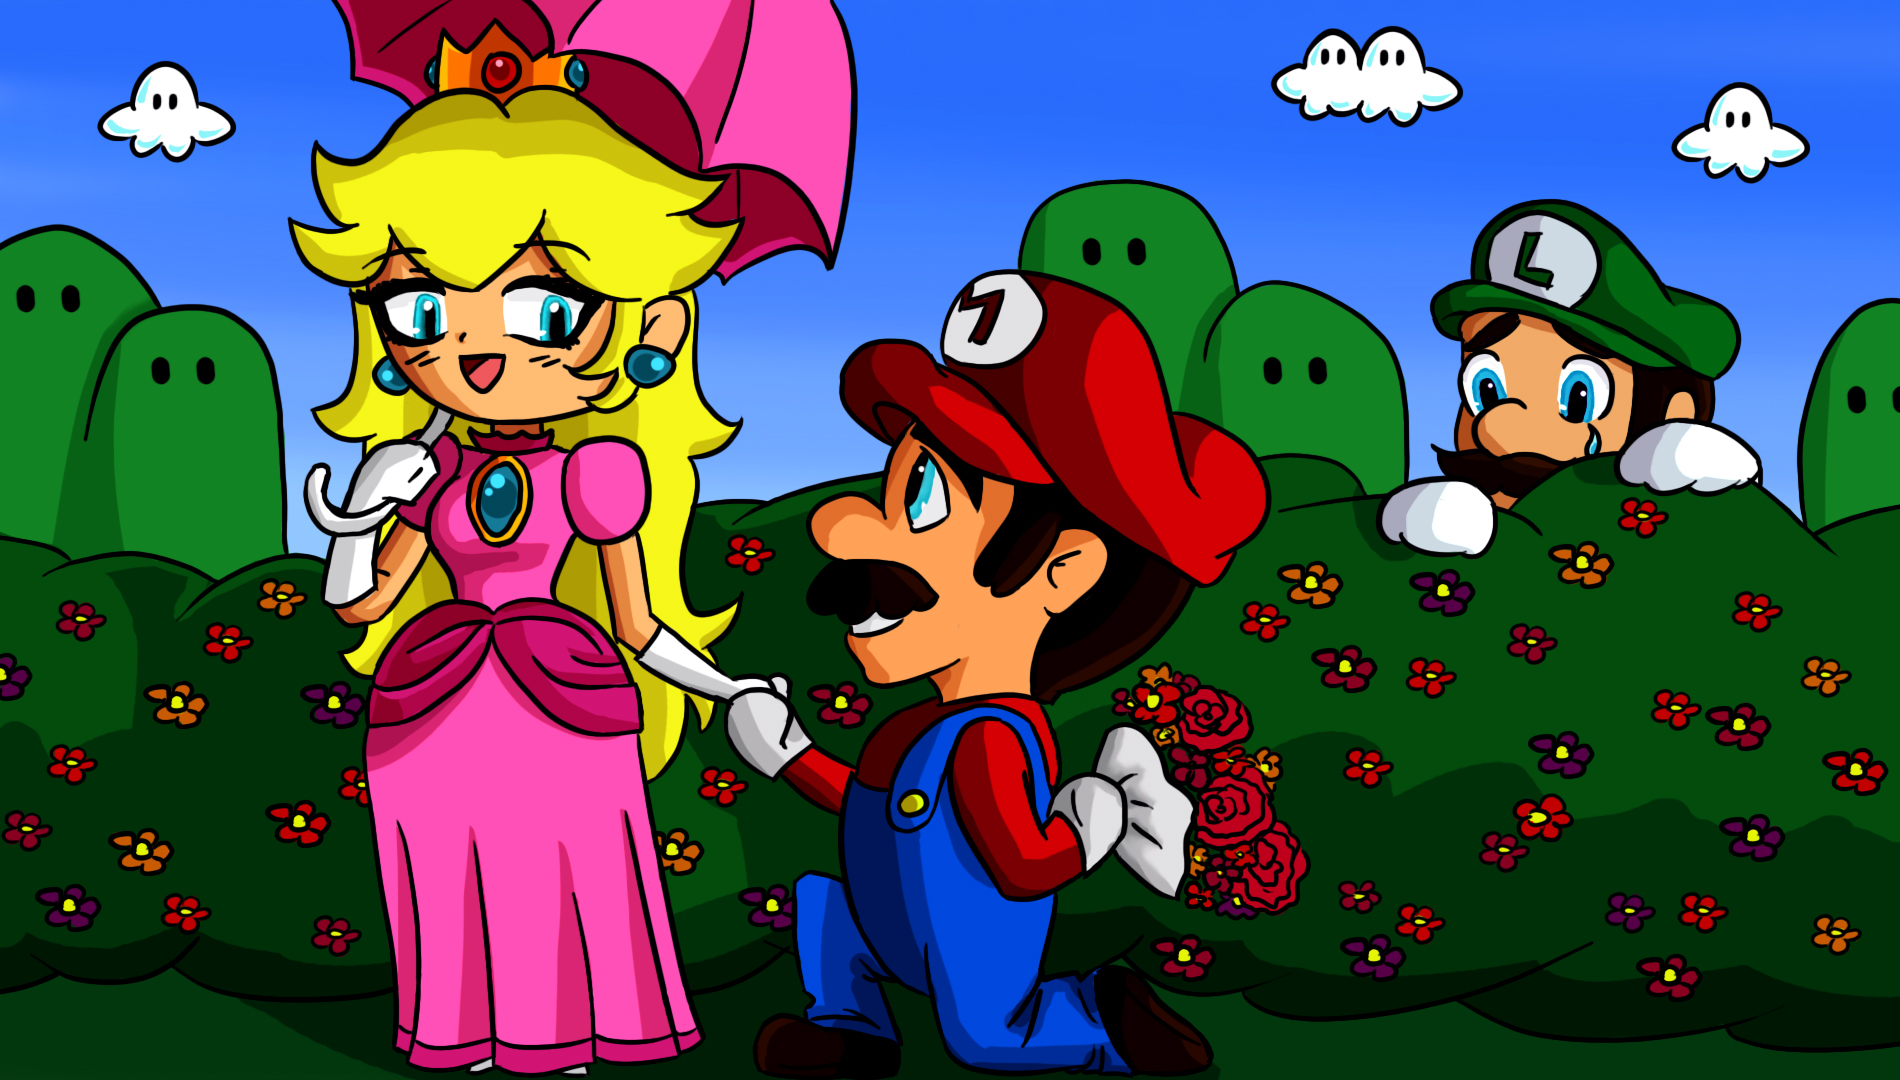 Mario And Peach Happy Time By Kaeveris On DeviantArt.